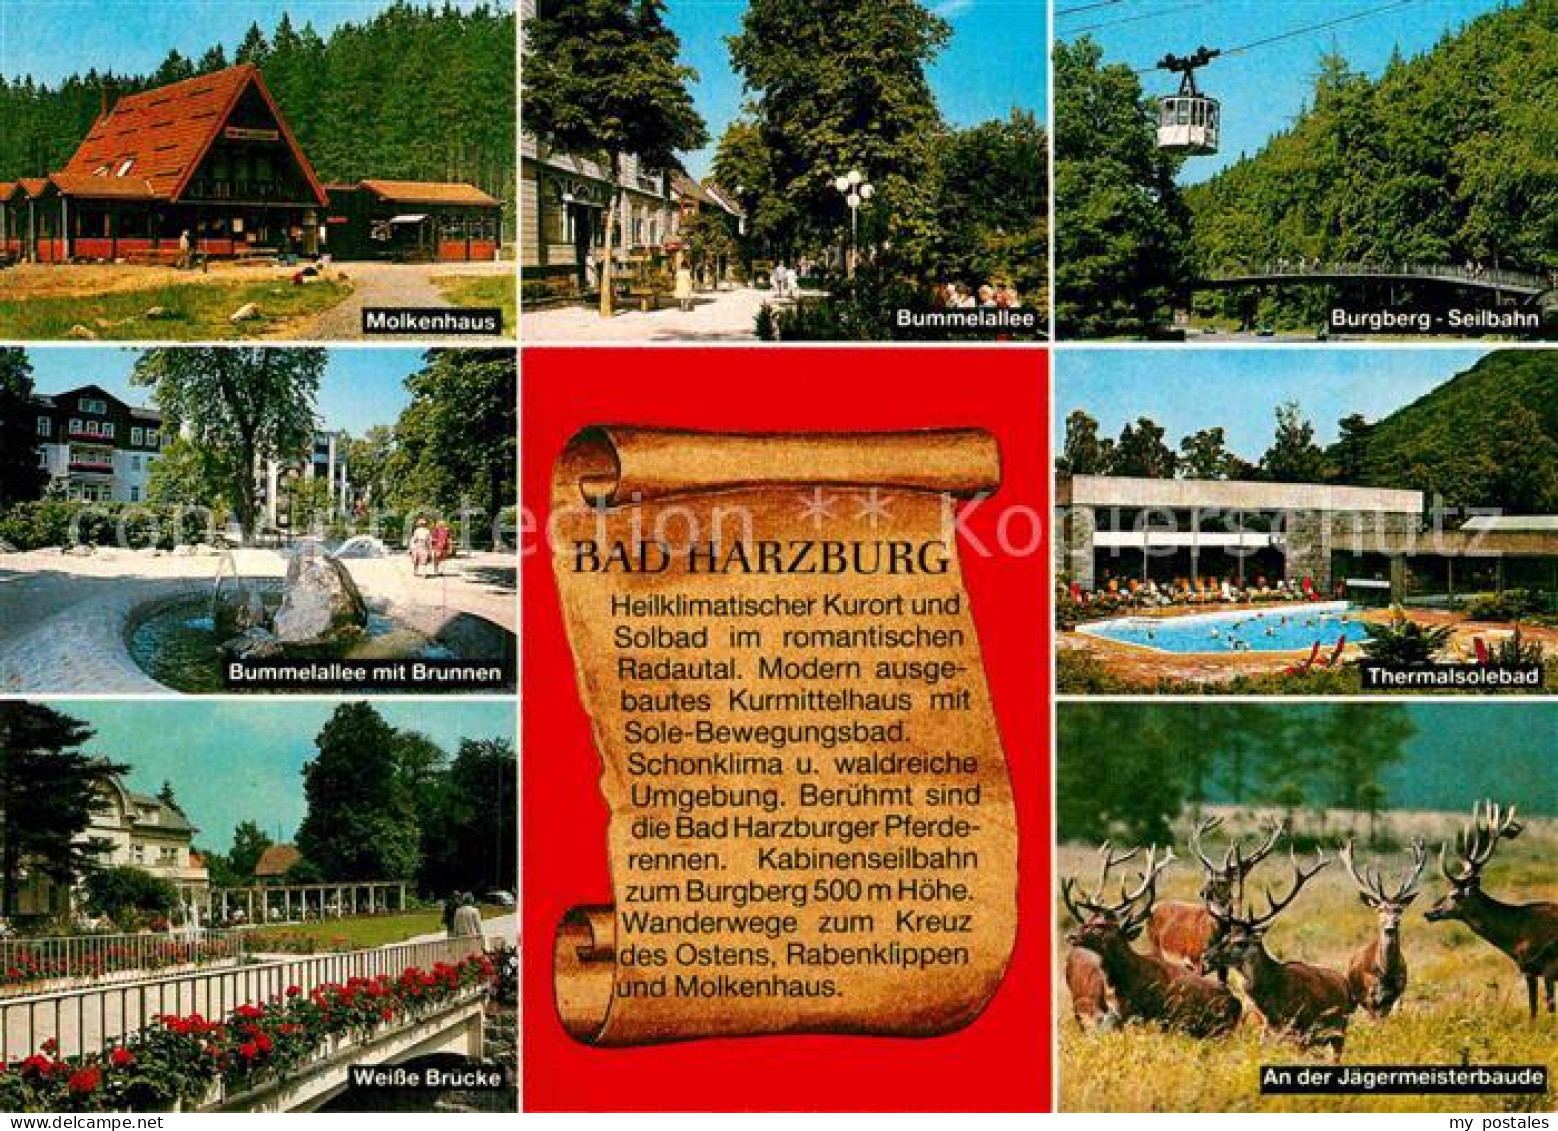 72869440 Bad Harzburg Molkenhaus Bummelallee Burgber-Seilbahn  Bad Harzburg - Bad Harzburg